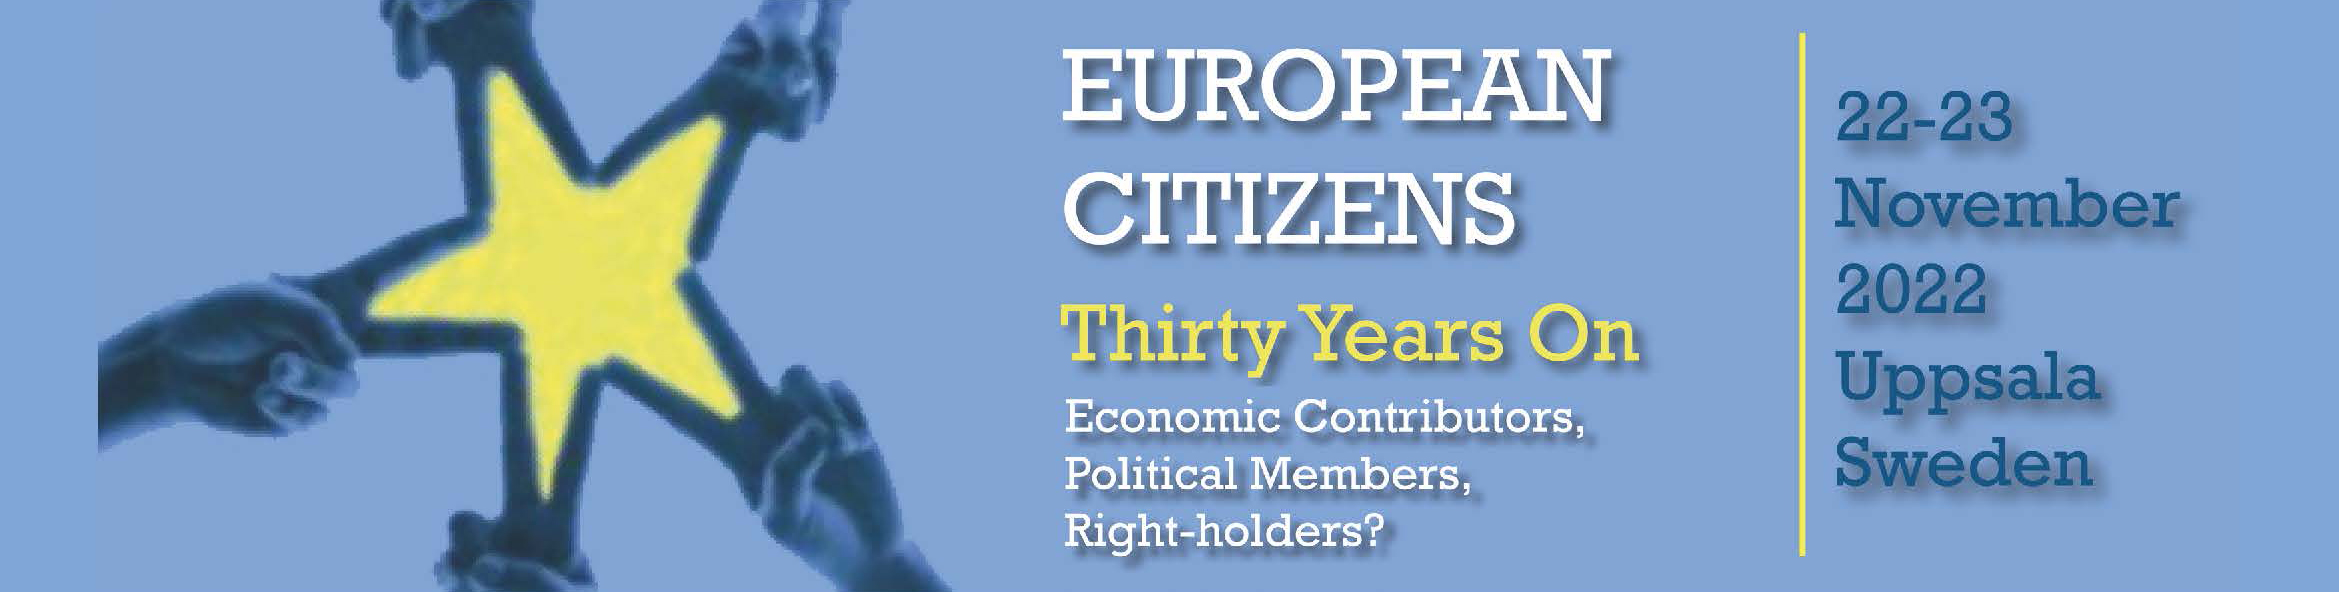 European Citizenship Thirty Years On 2022